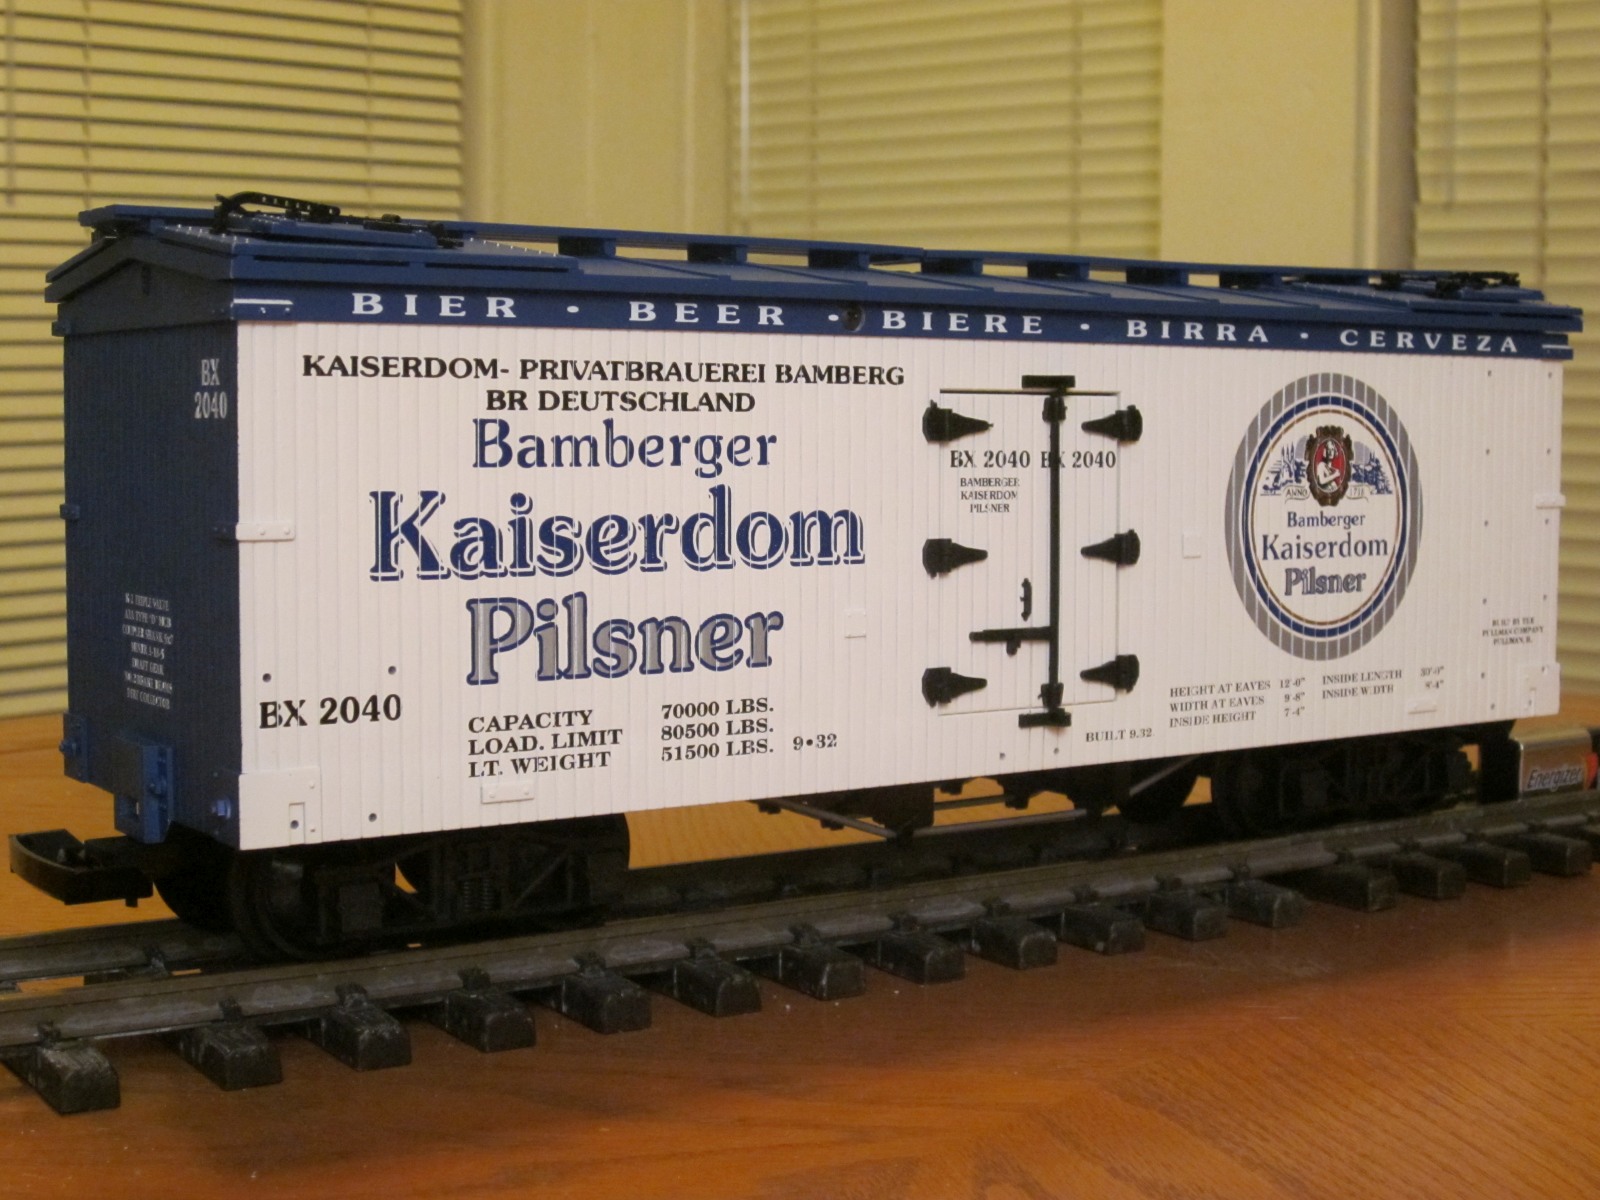 R16107 Bamberger Kaiserdom Beer BX 2040